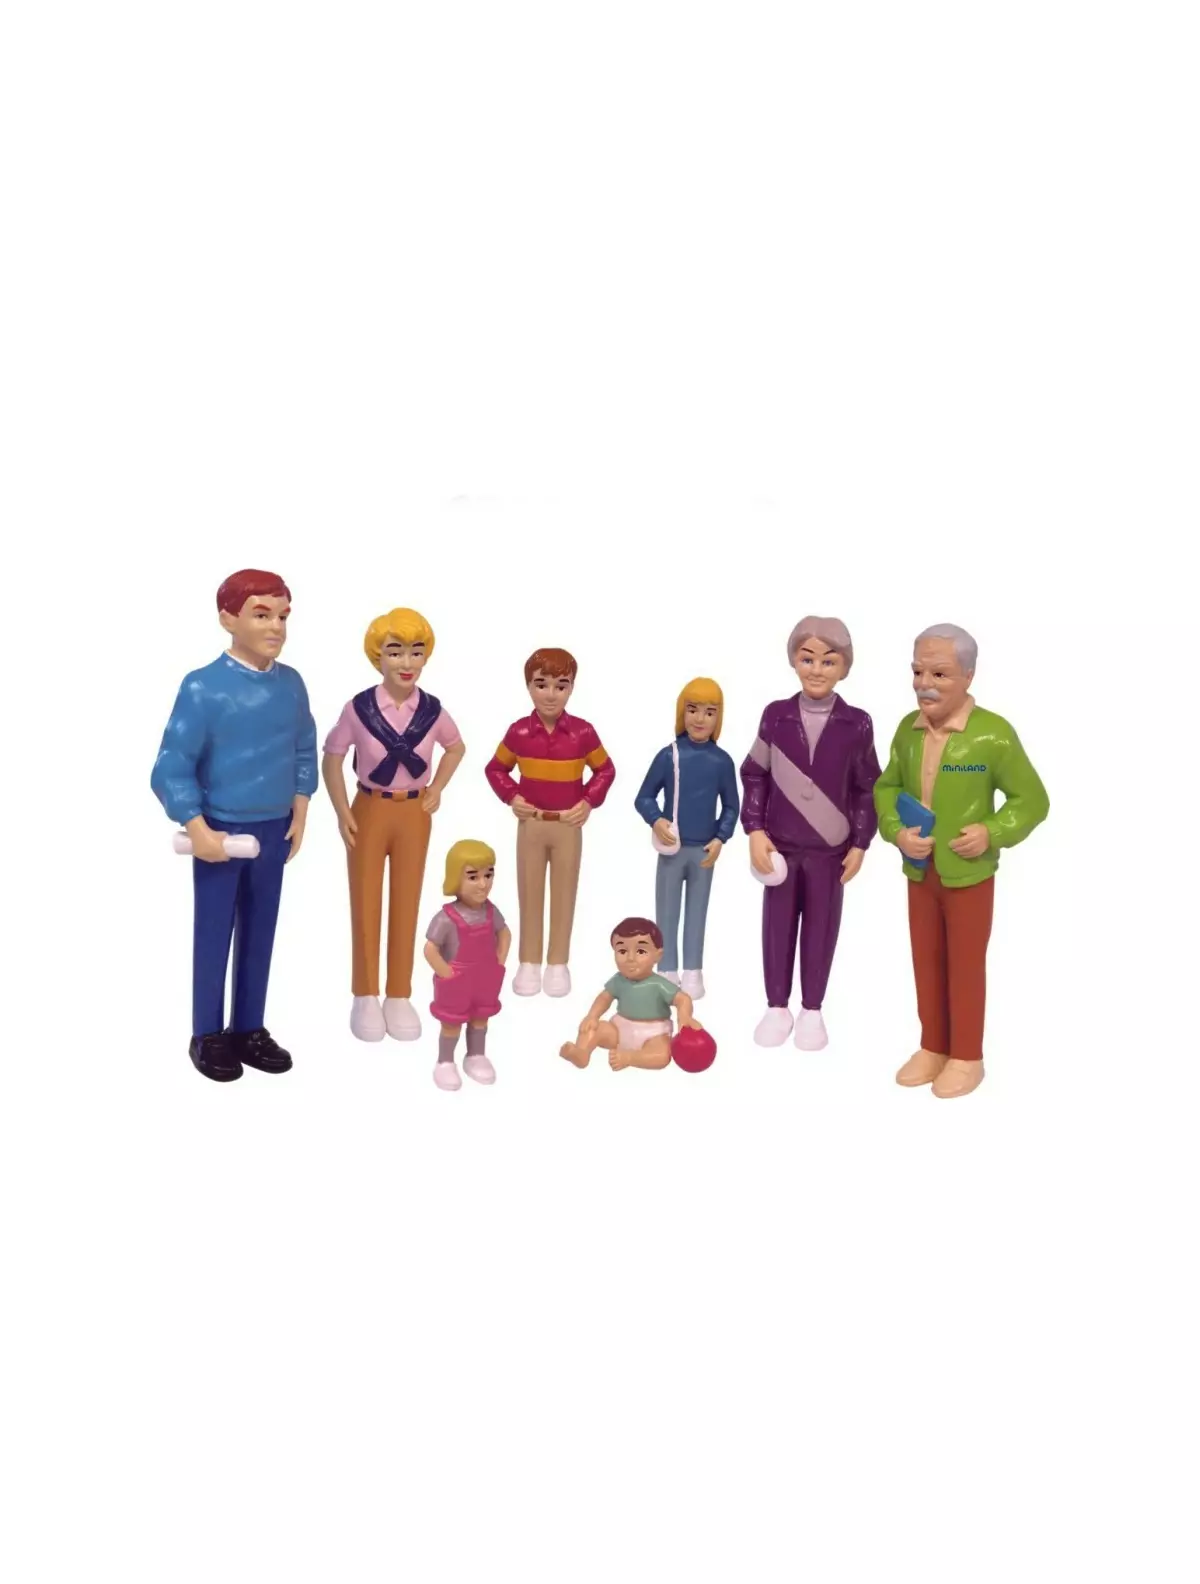 Familie de europeni Miniland 8 figurine